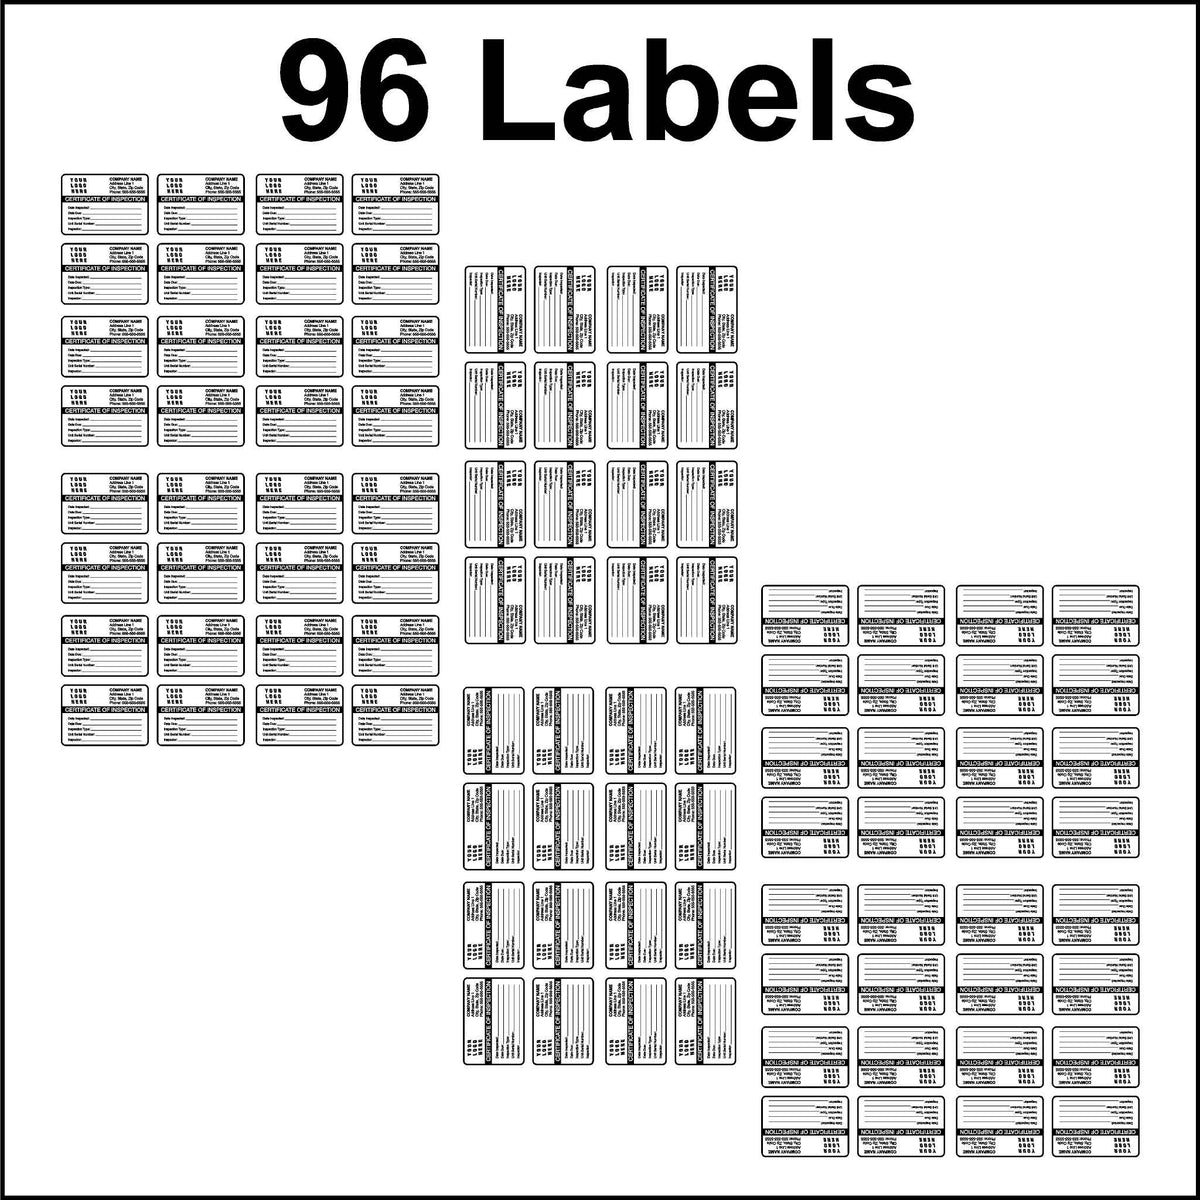 96 Embossable aluminum inspection labels.